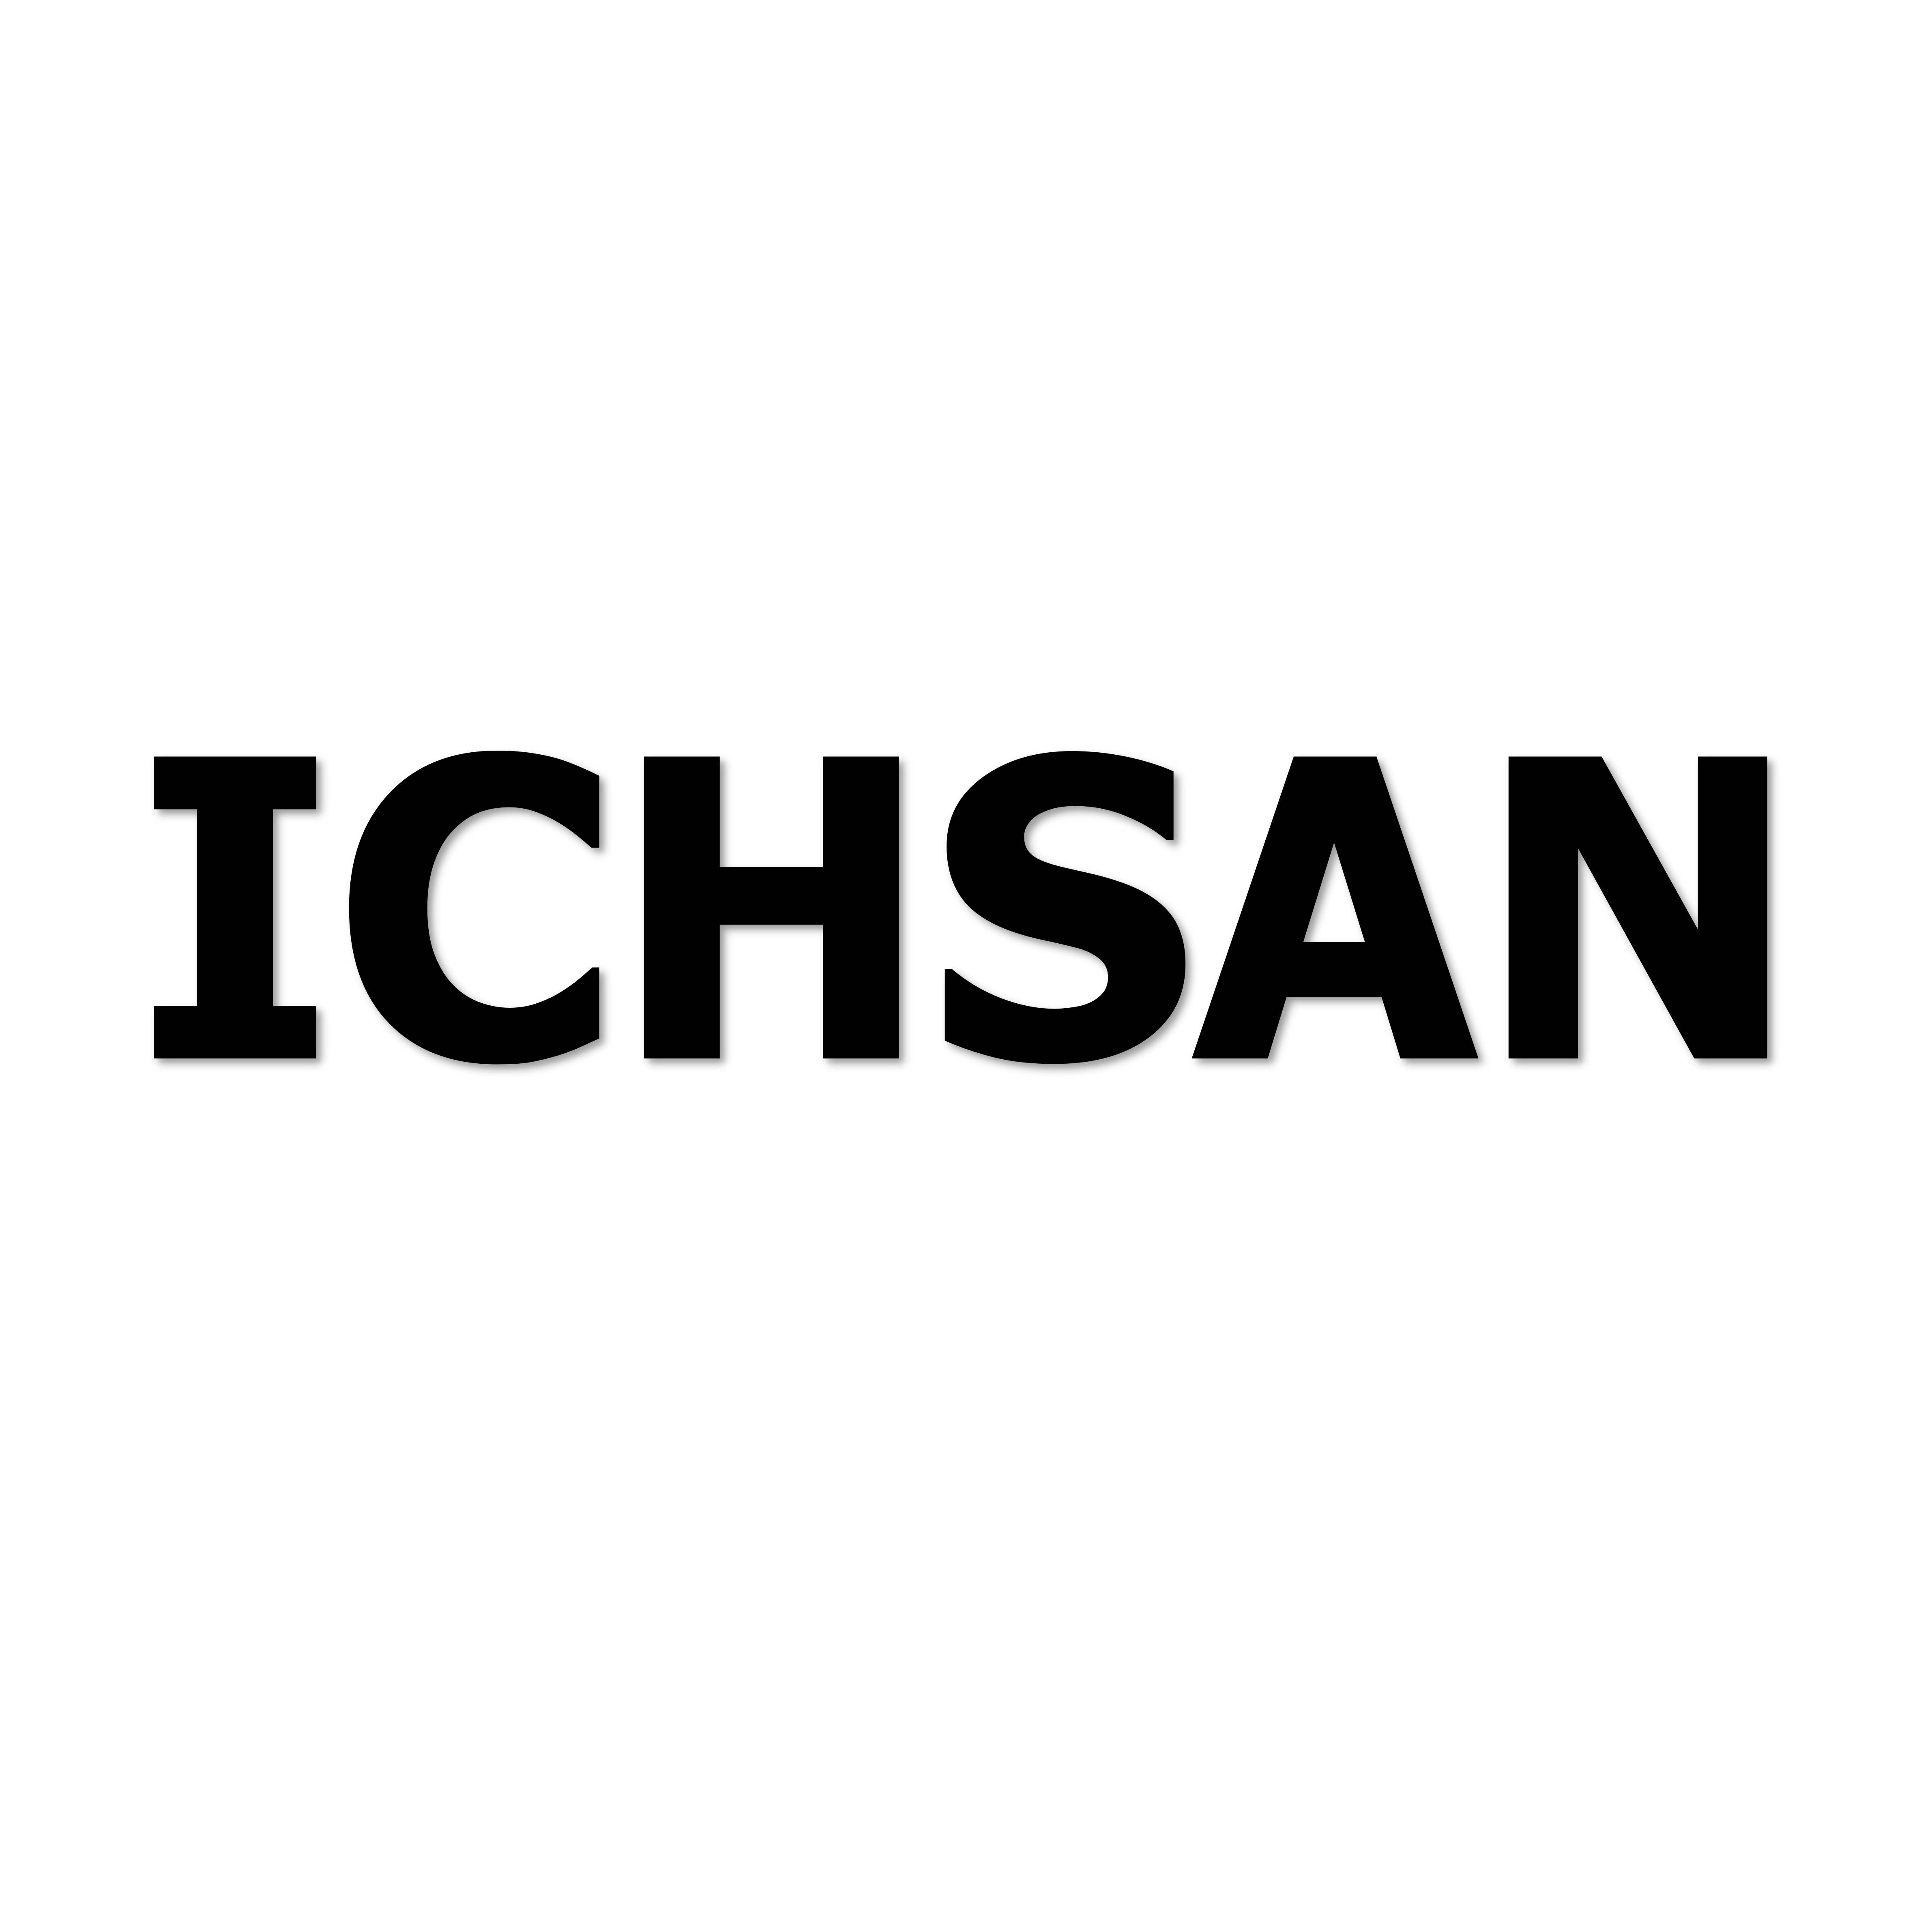 ICHSAN_01.png